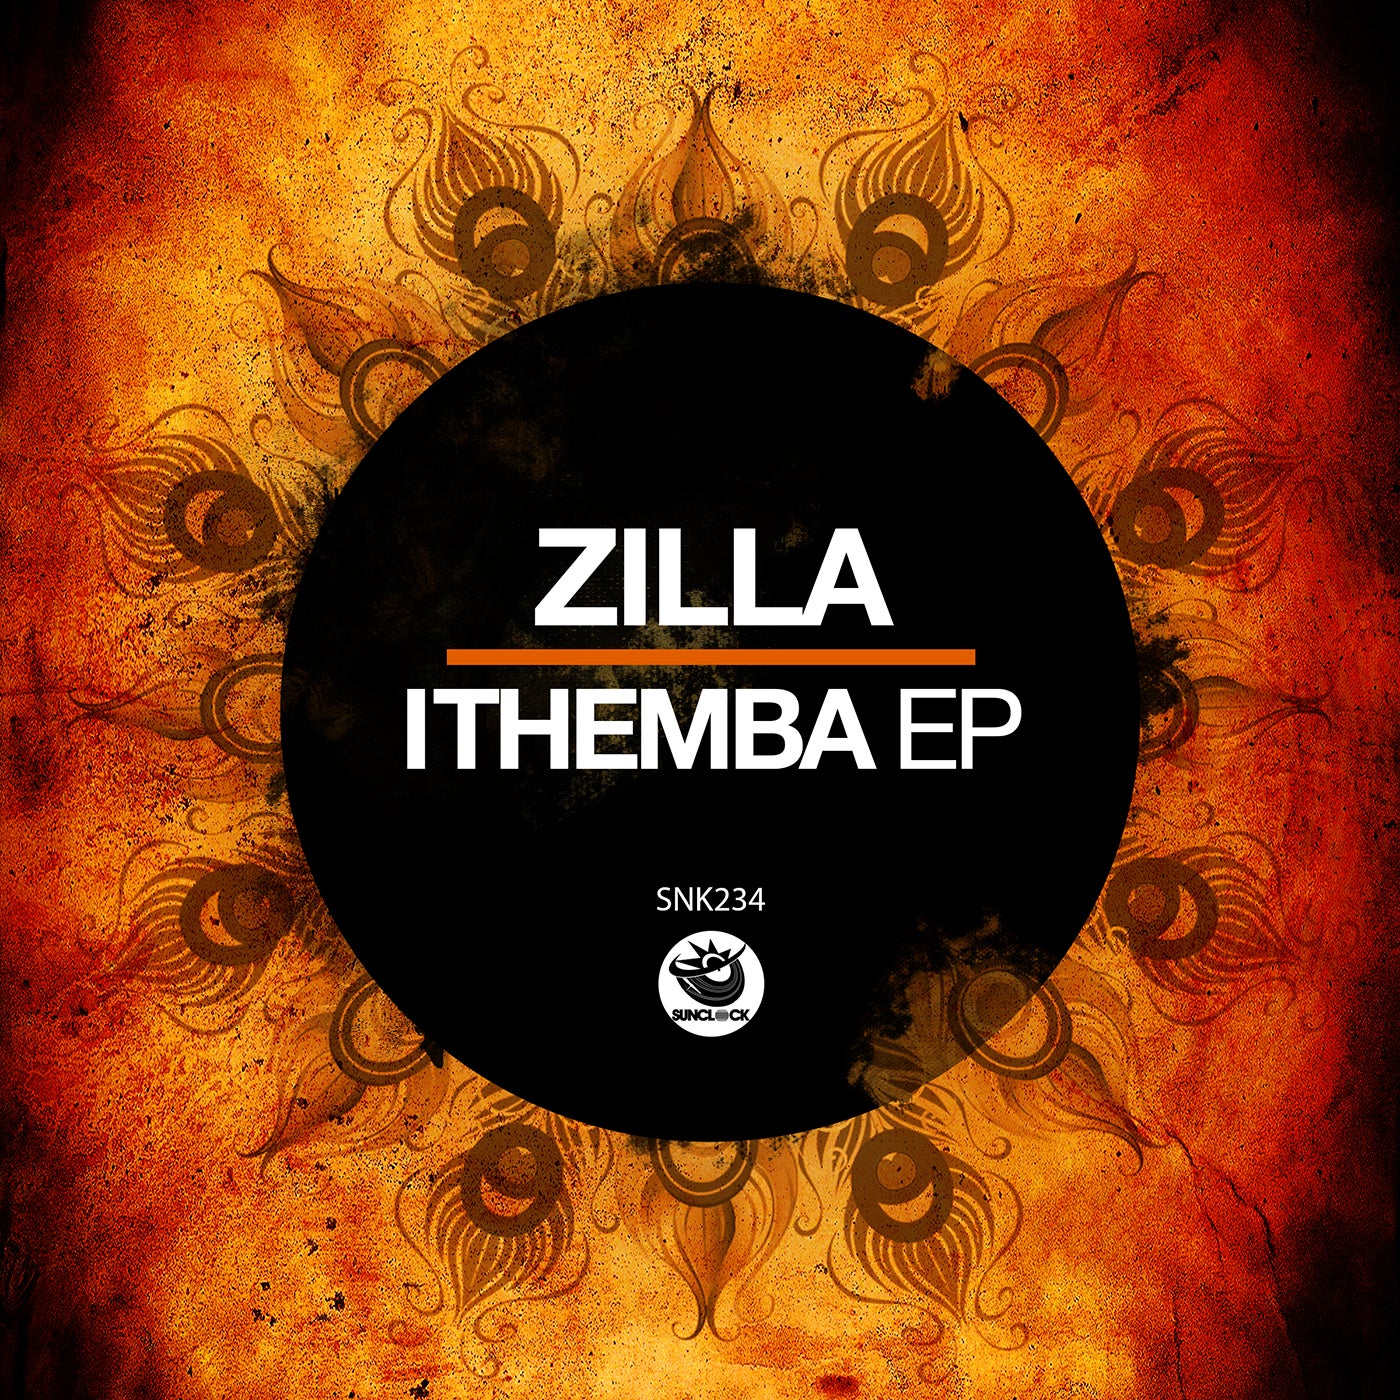 Zilla - Ithemba EP [SNK234]